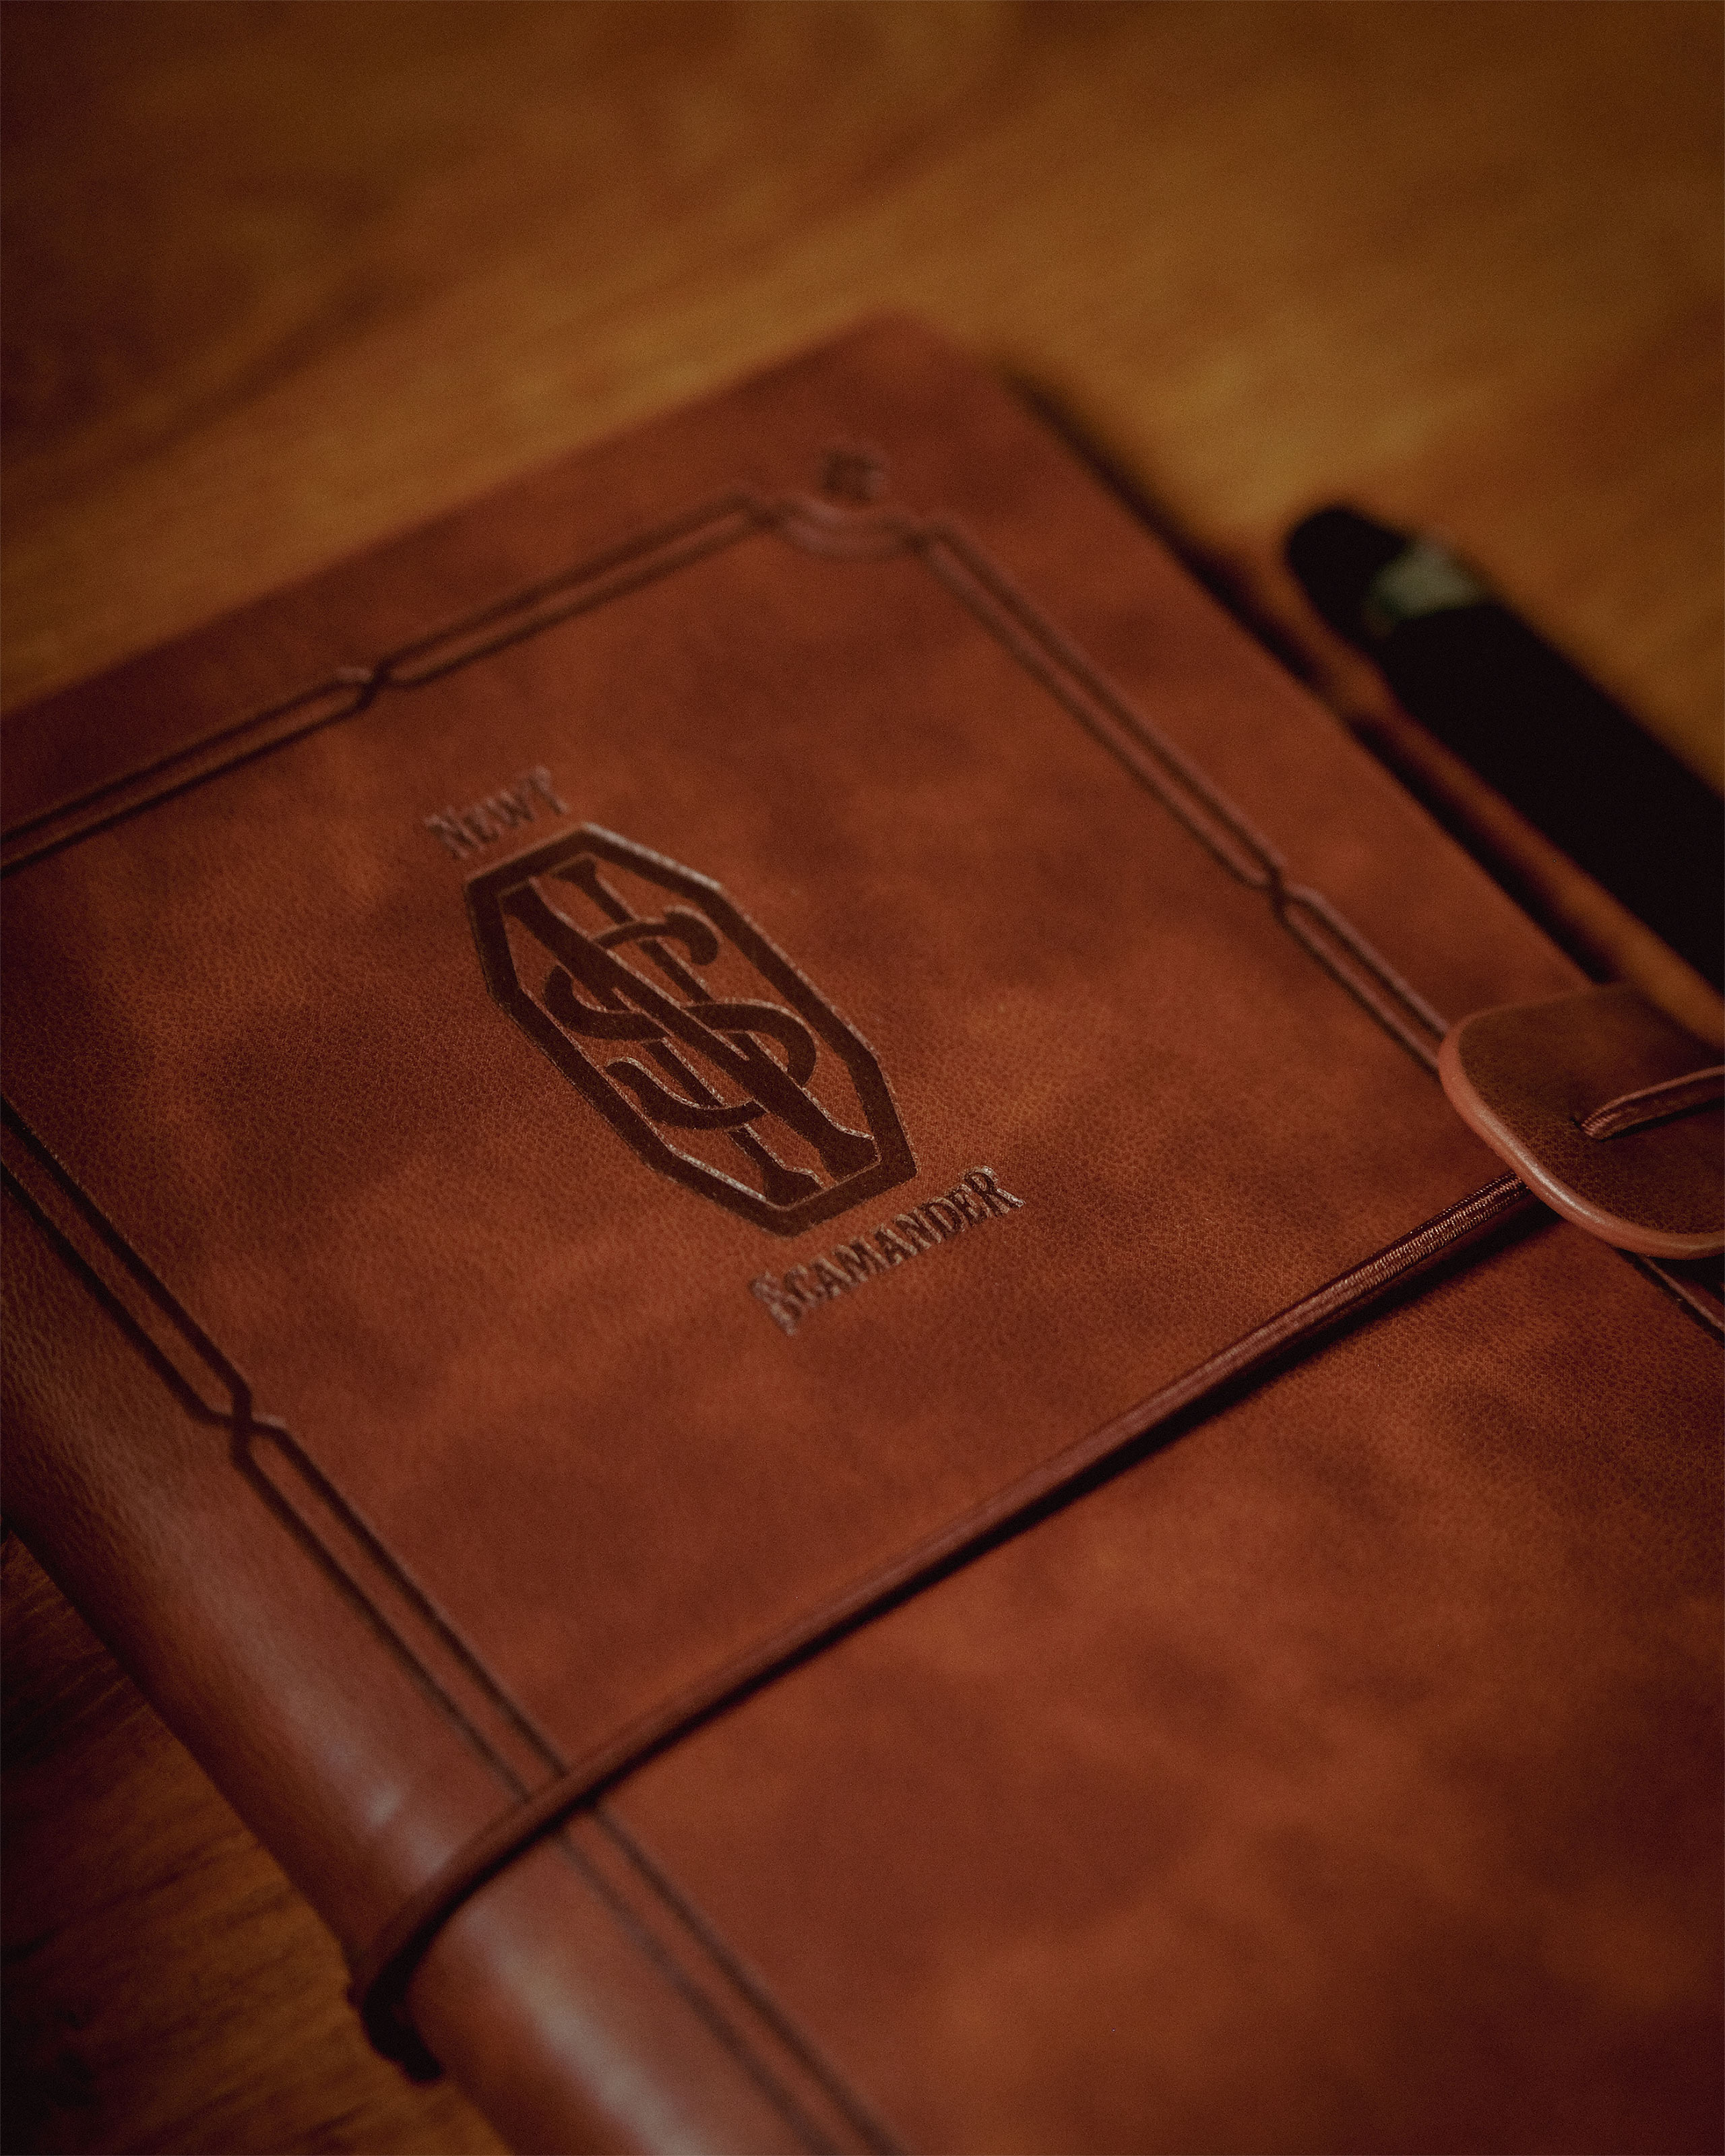 Newt Scamander Notebook - Fantastic Beasts